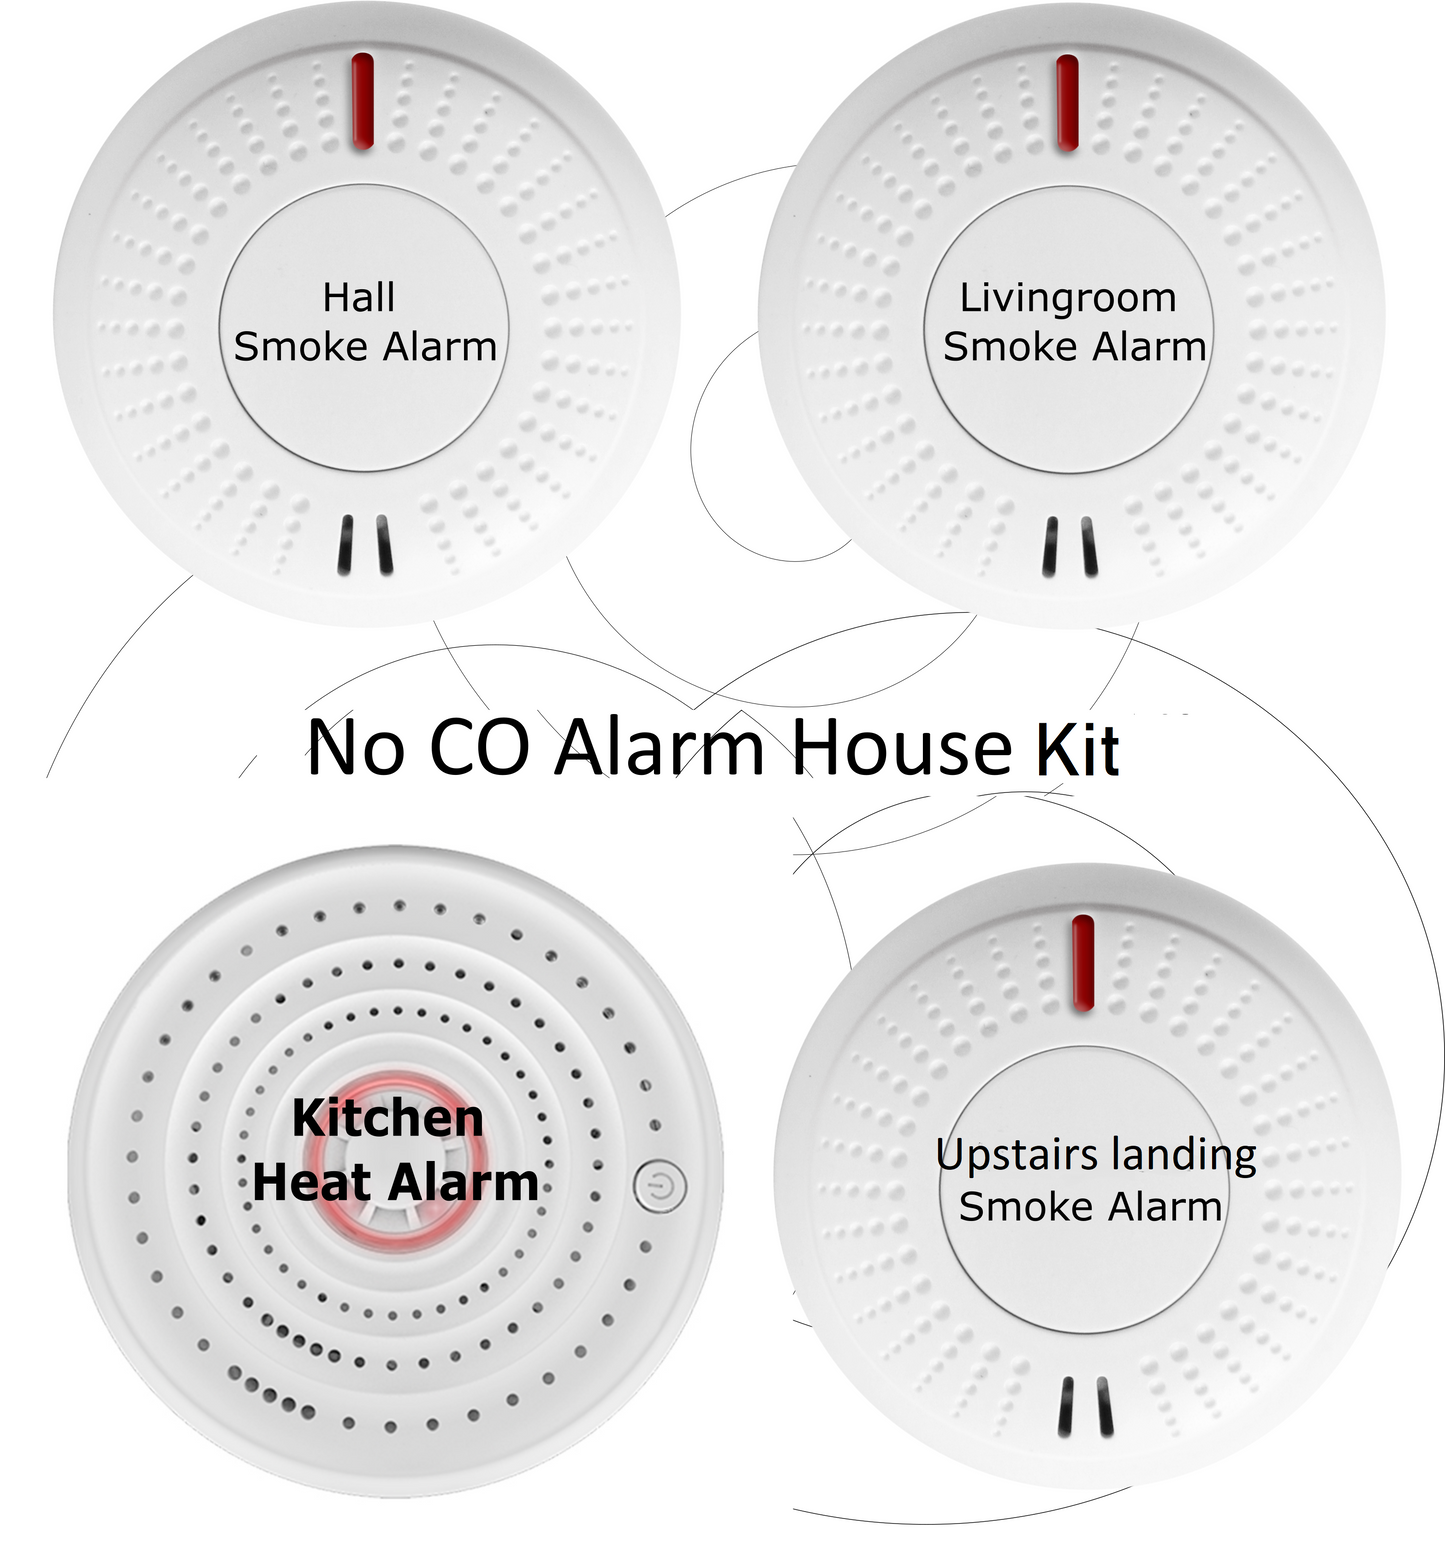 Smoke & Heat only - House kit